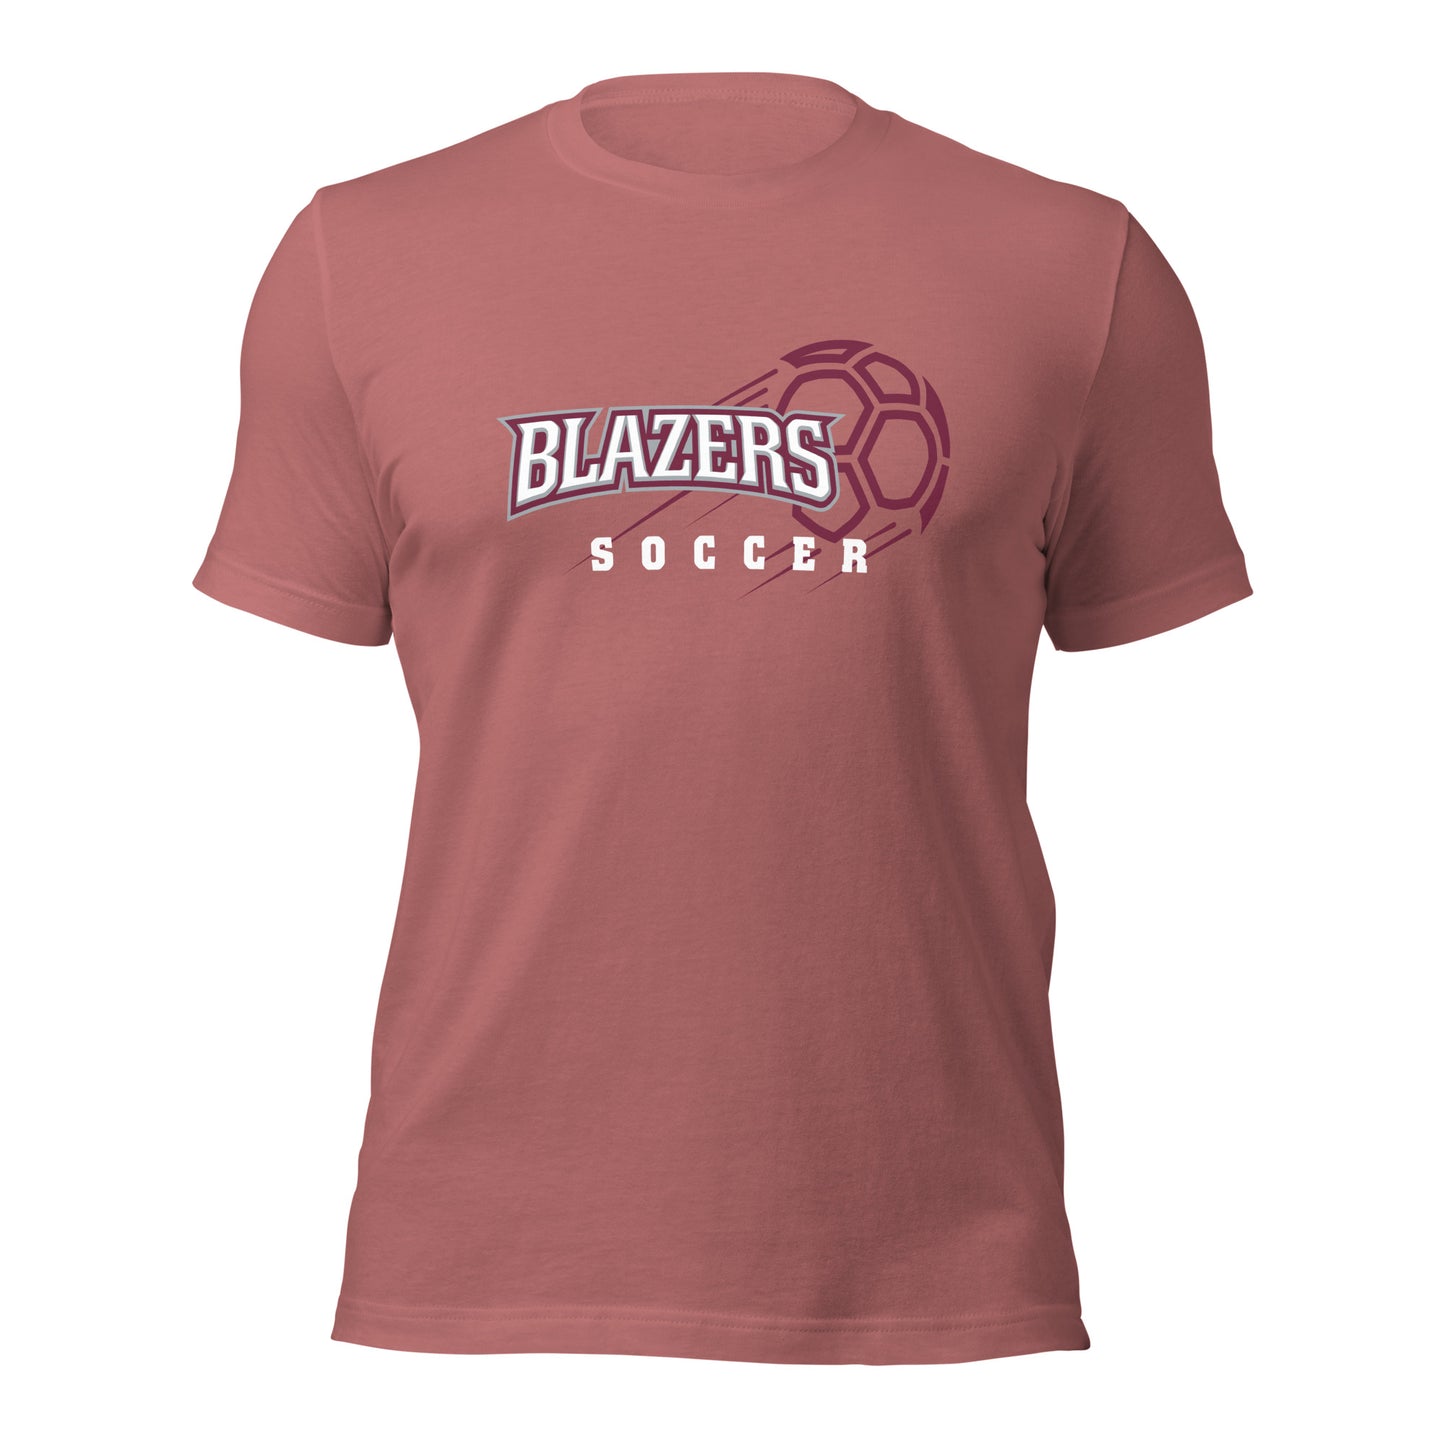 Blazers Soccer Unisex Short-Sleeve T-Shirt Dark Colors